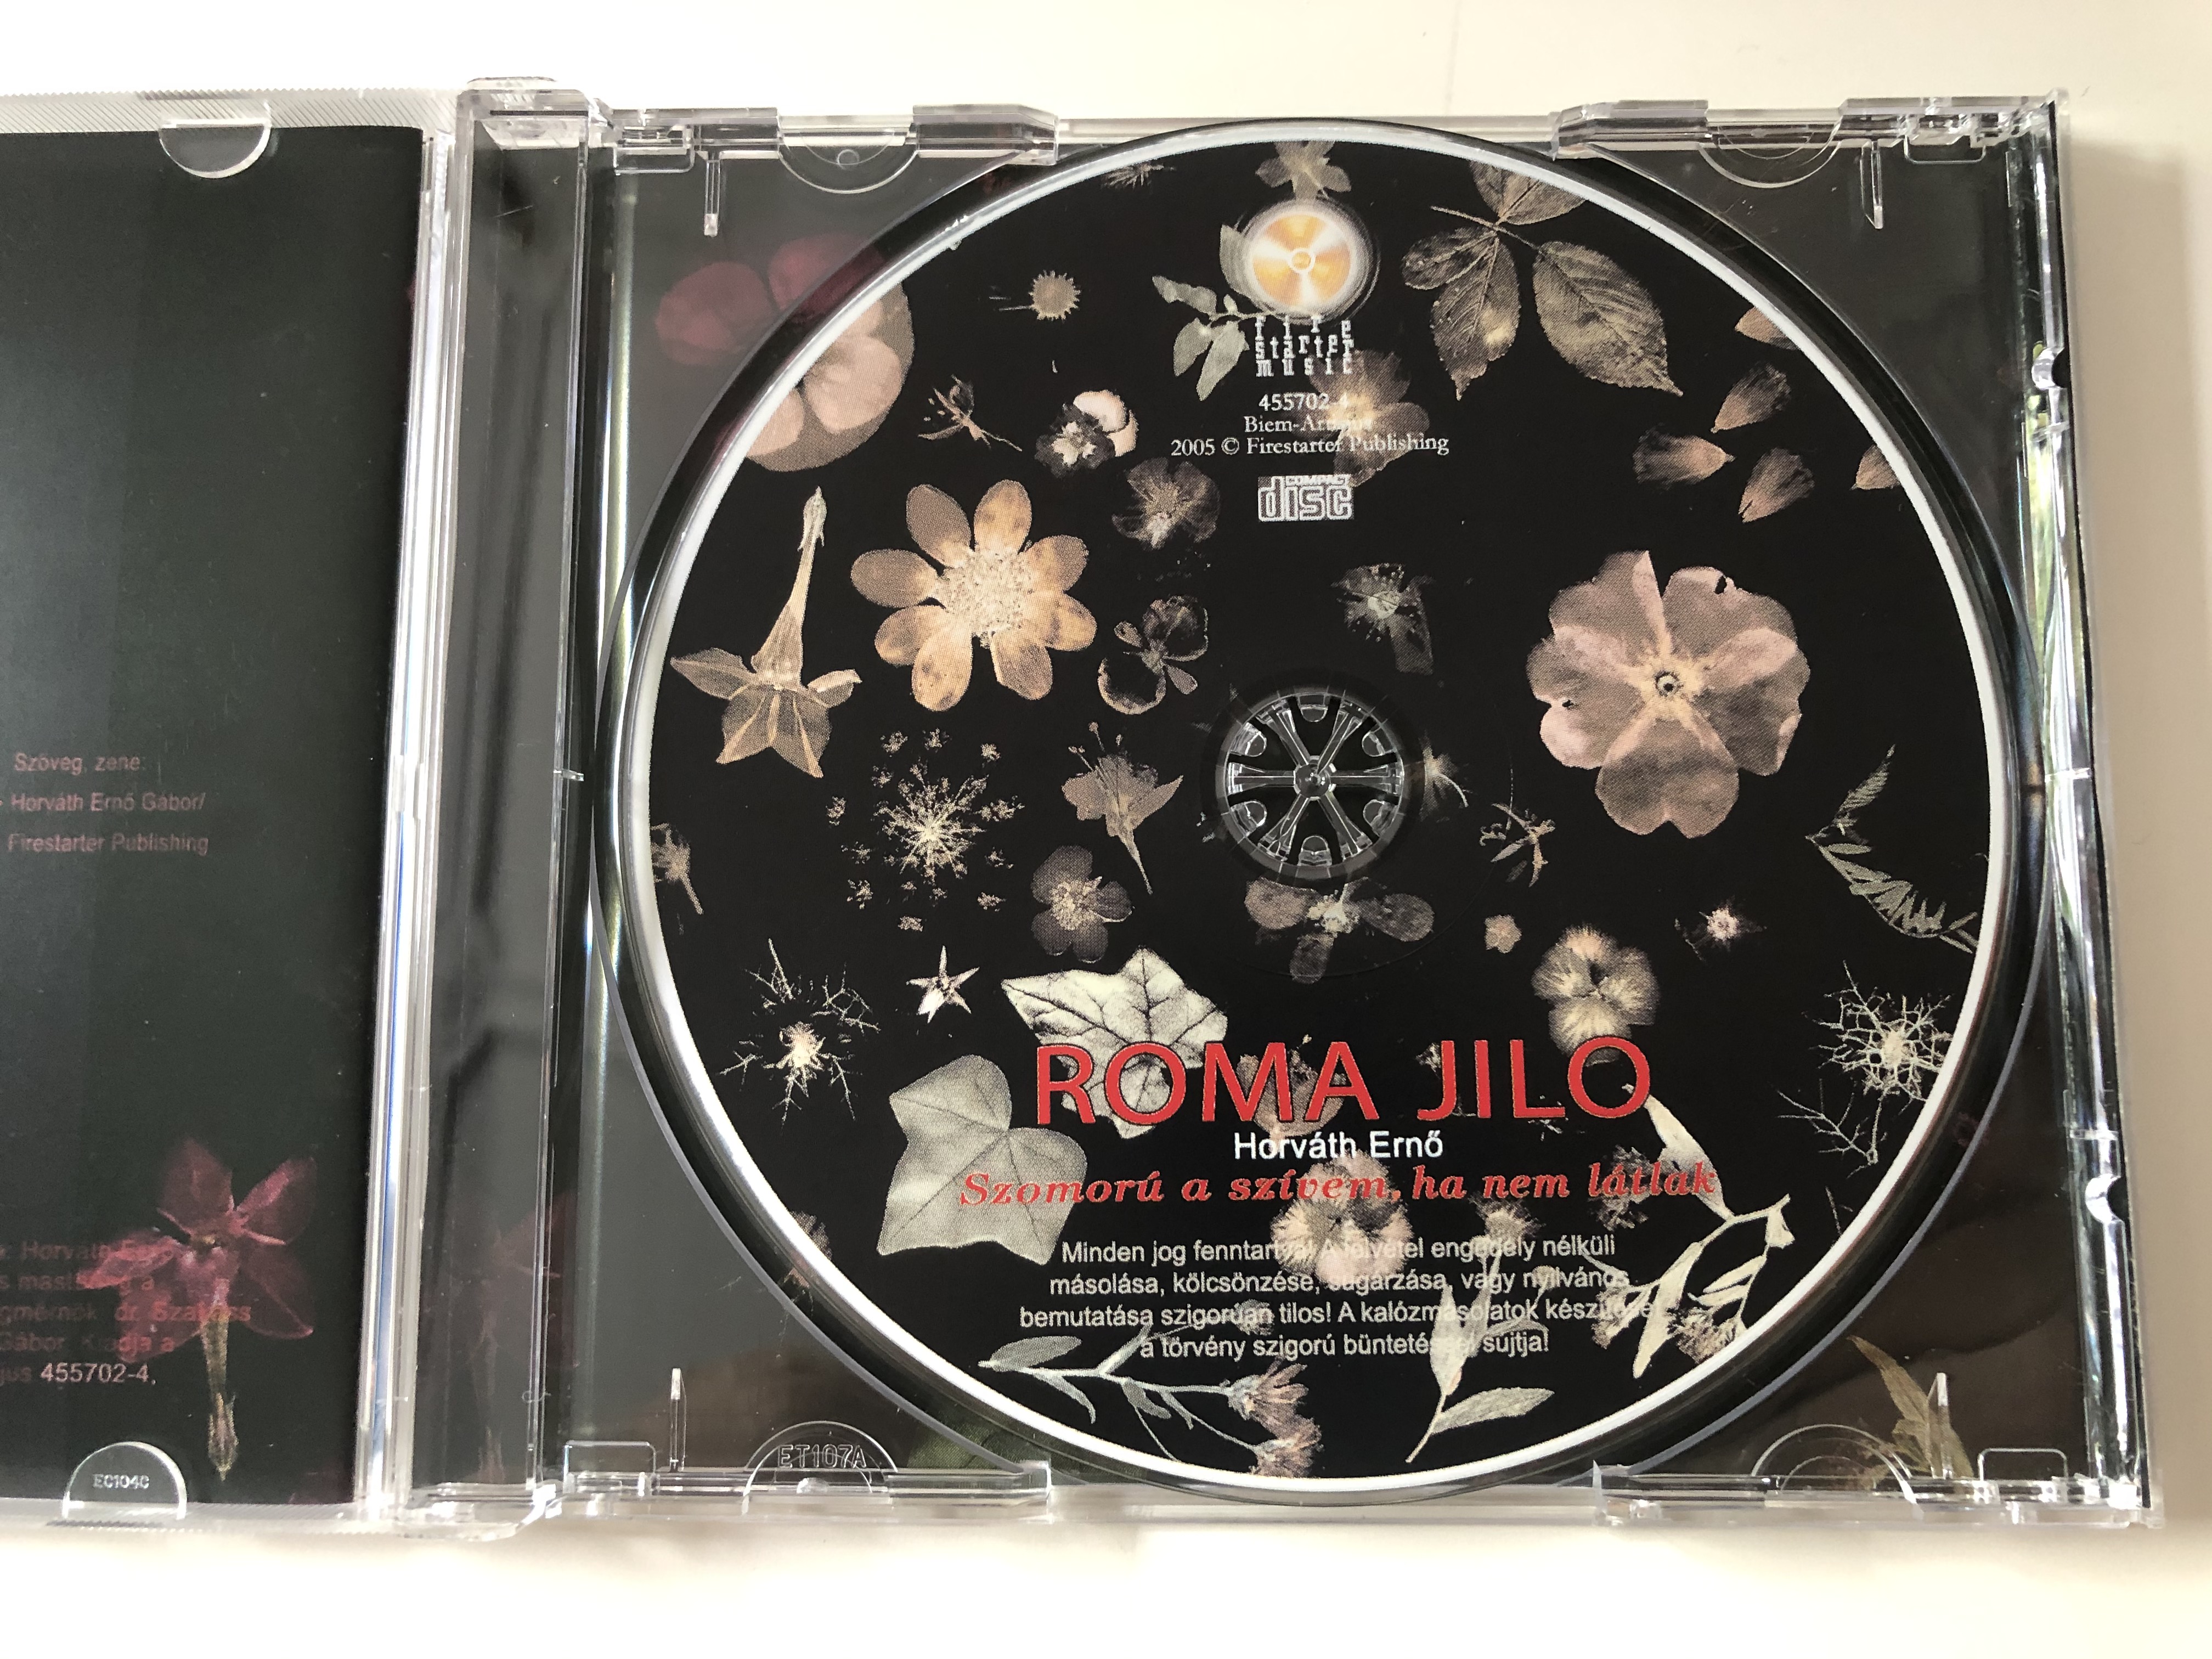 roma-jilo-horvath-erno-szomoru-a-szivem-ha-nem-latak-firestarter-publishing-audio-cd-2005-455702-4-4-.jpg